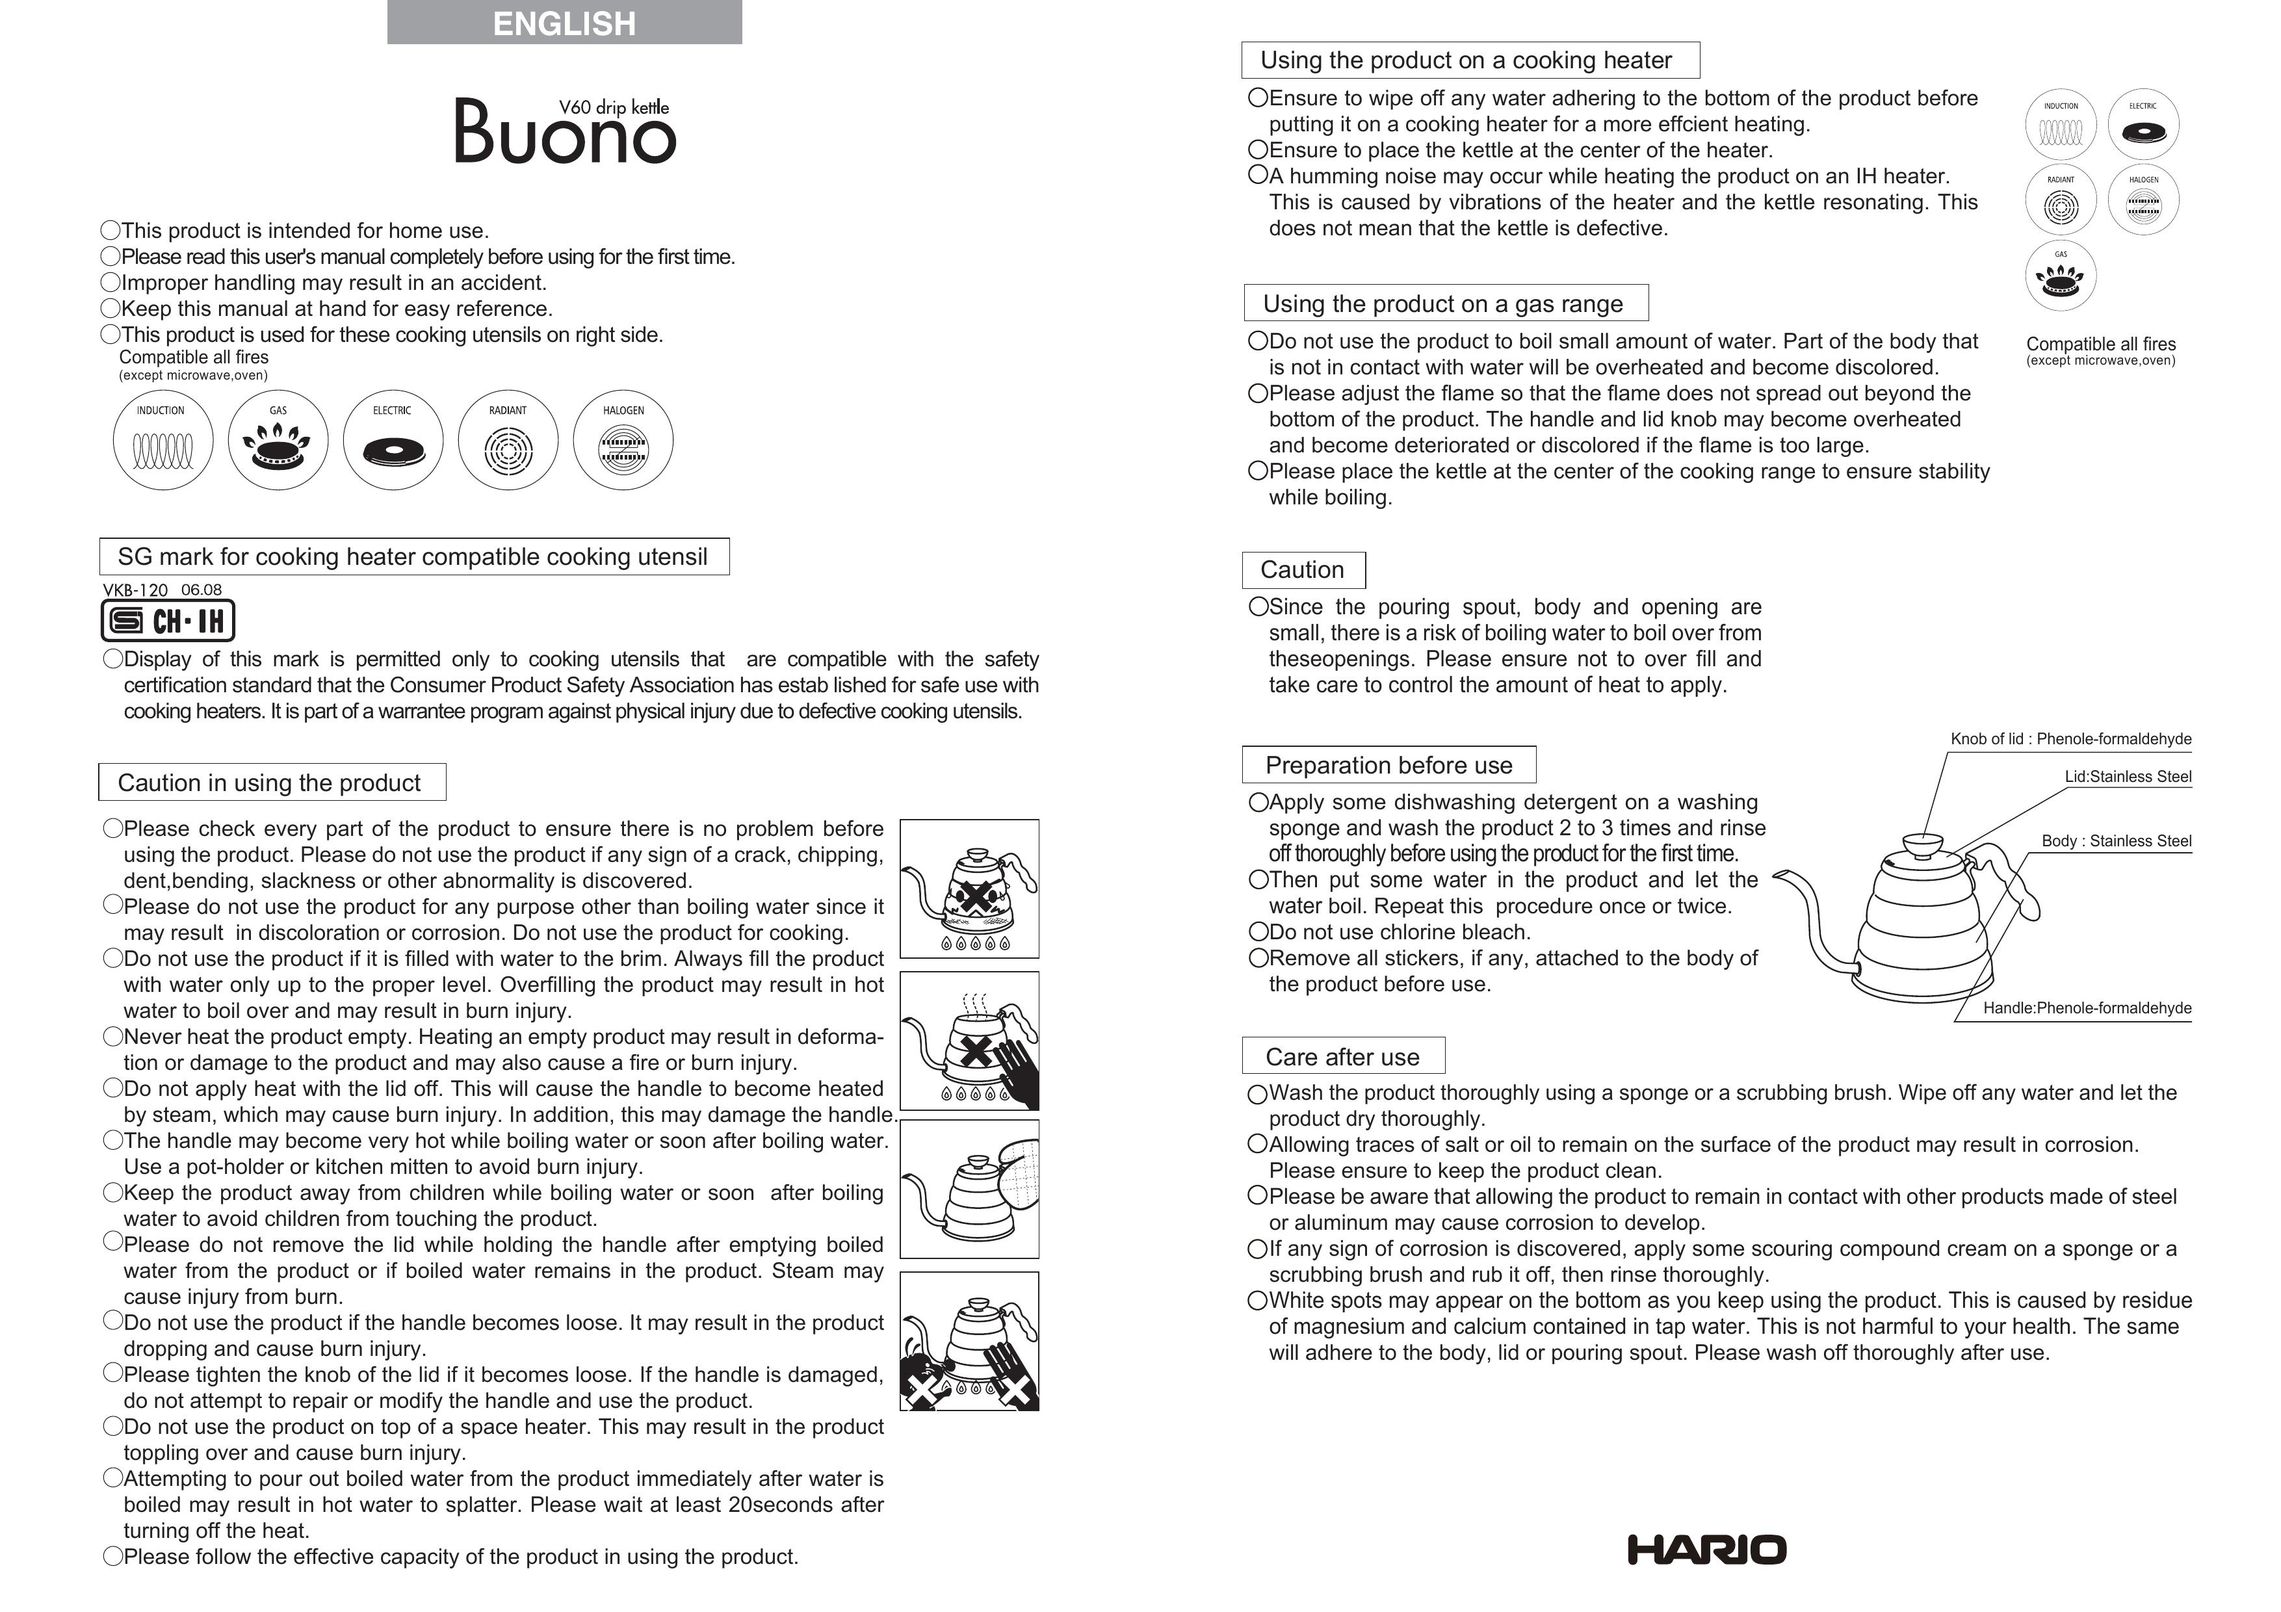 Hario Glass VDG-02B Hot Beverage Maker User Manual